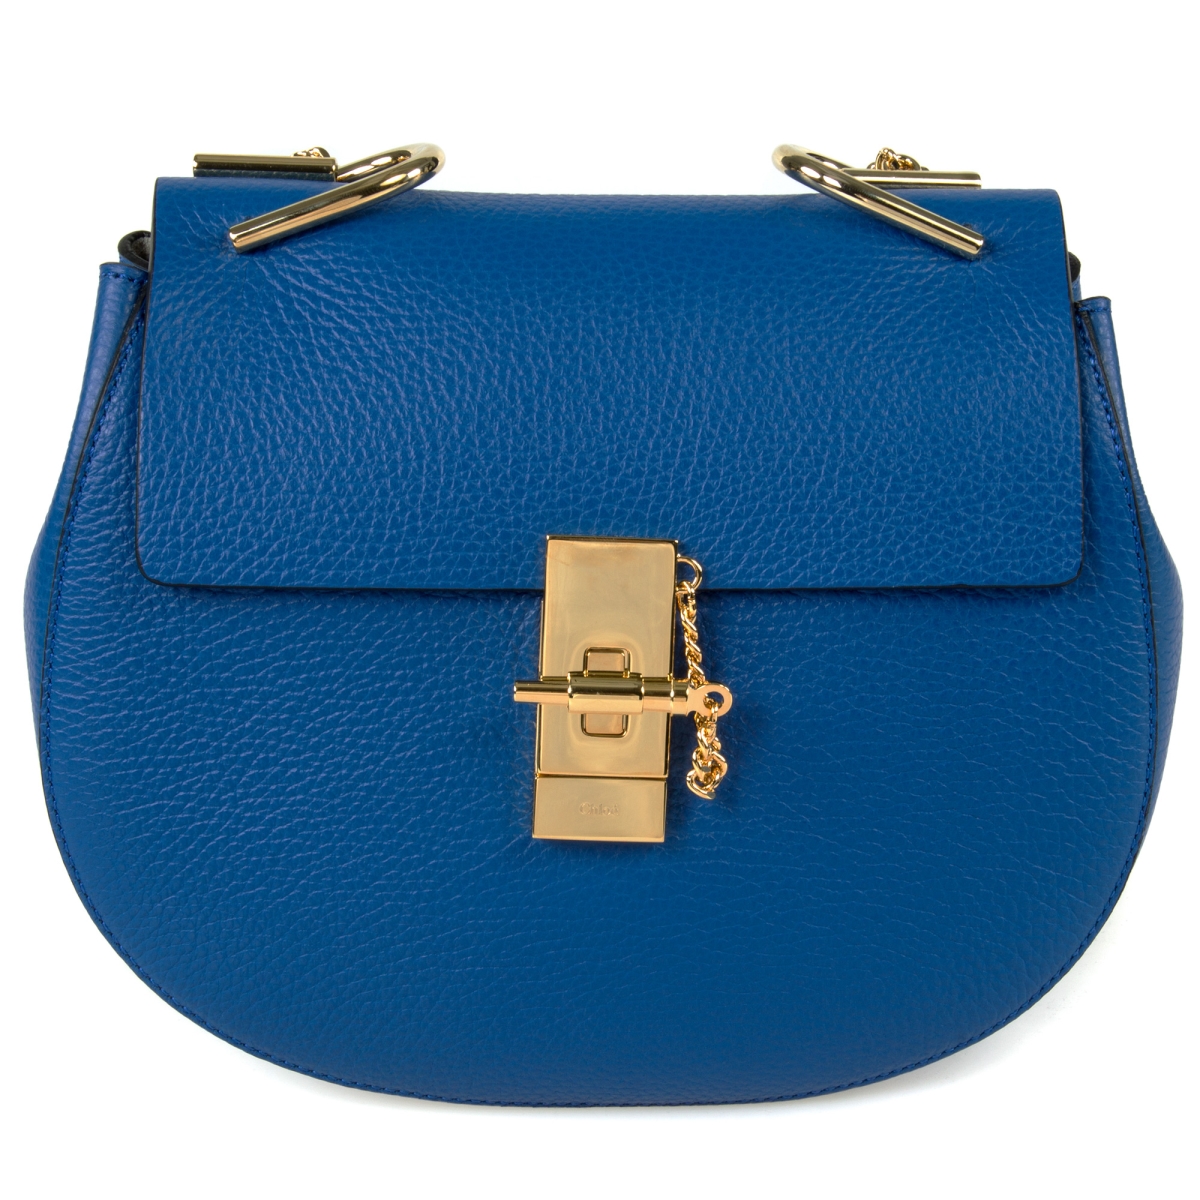 Picture of Chloe CHL-HBAG-DRW-BLU-M Medium Drew Bag, Blue with Gold Hardware